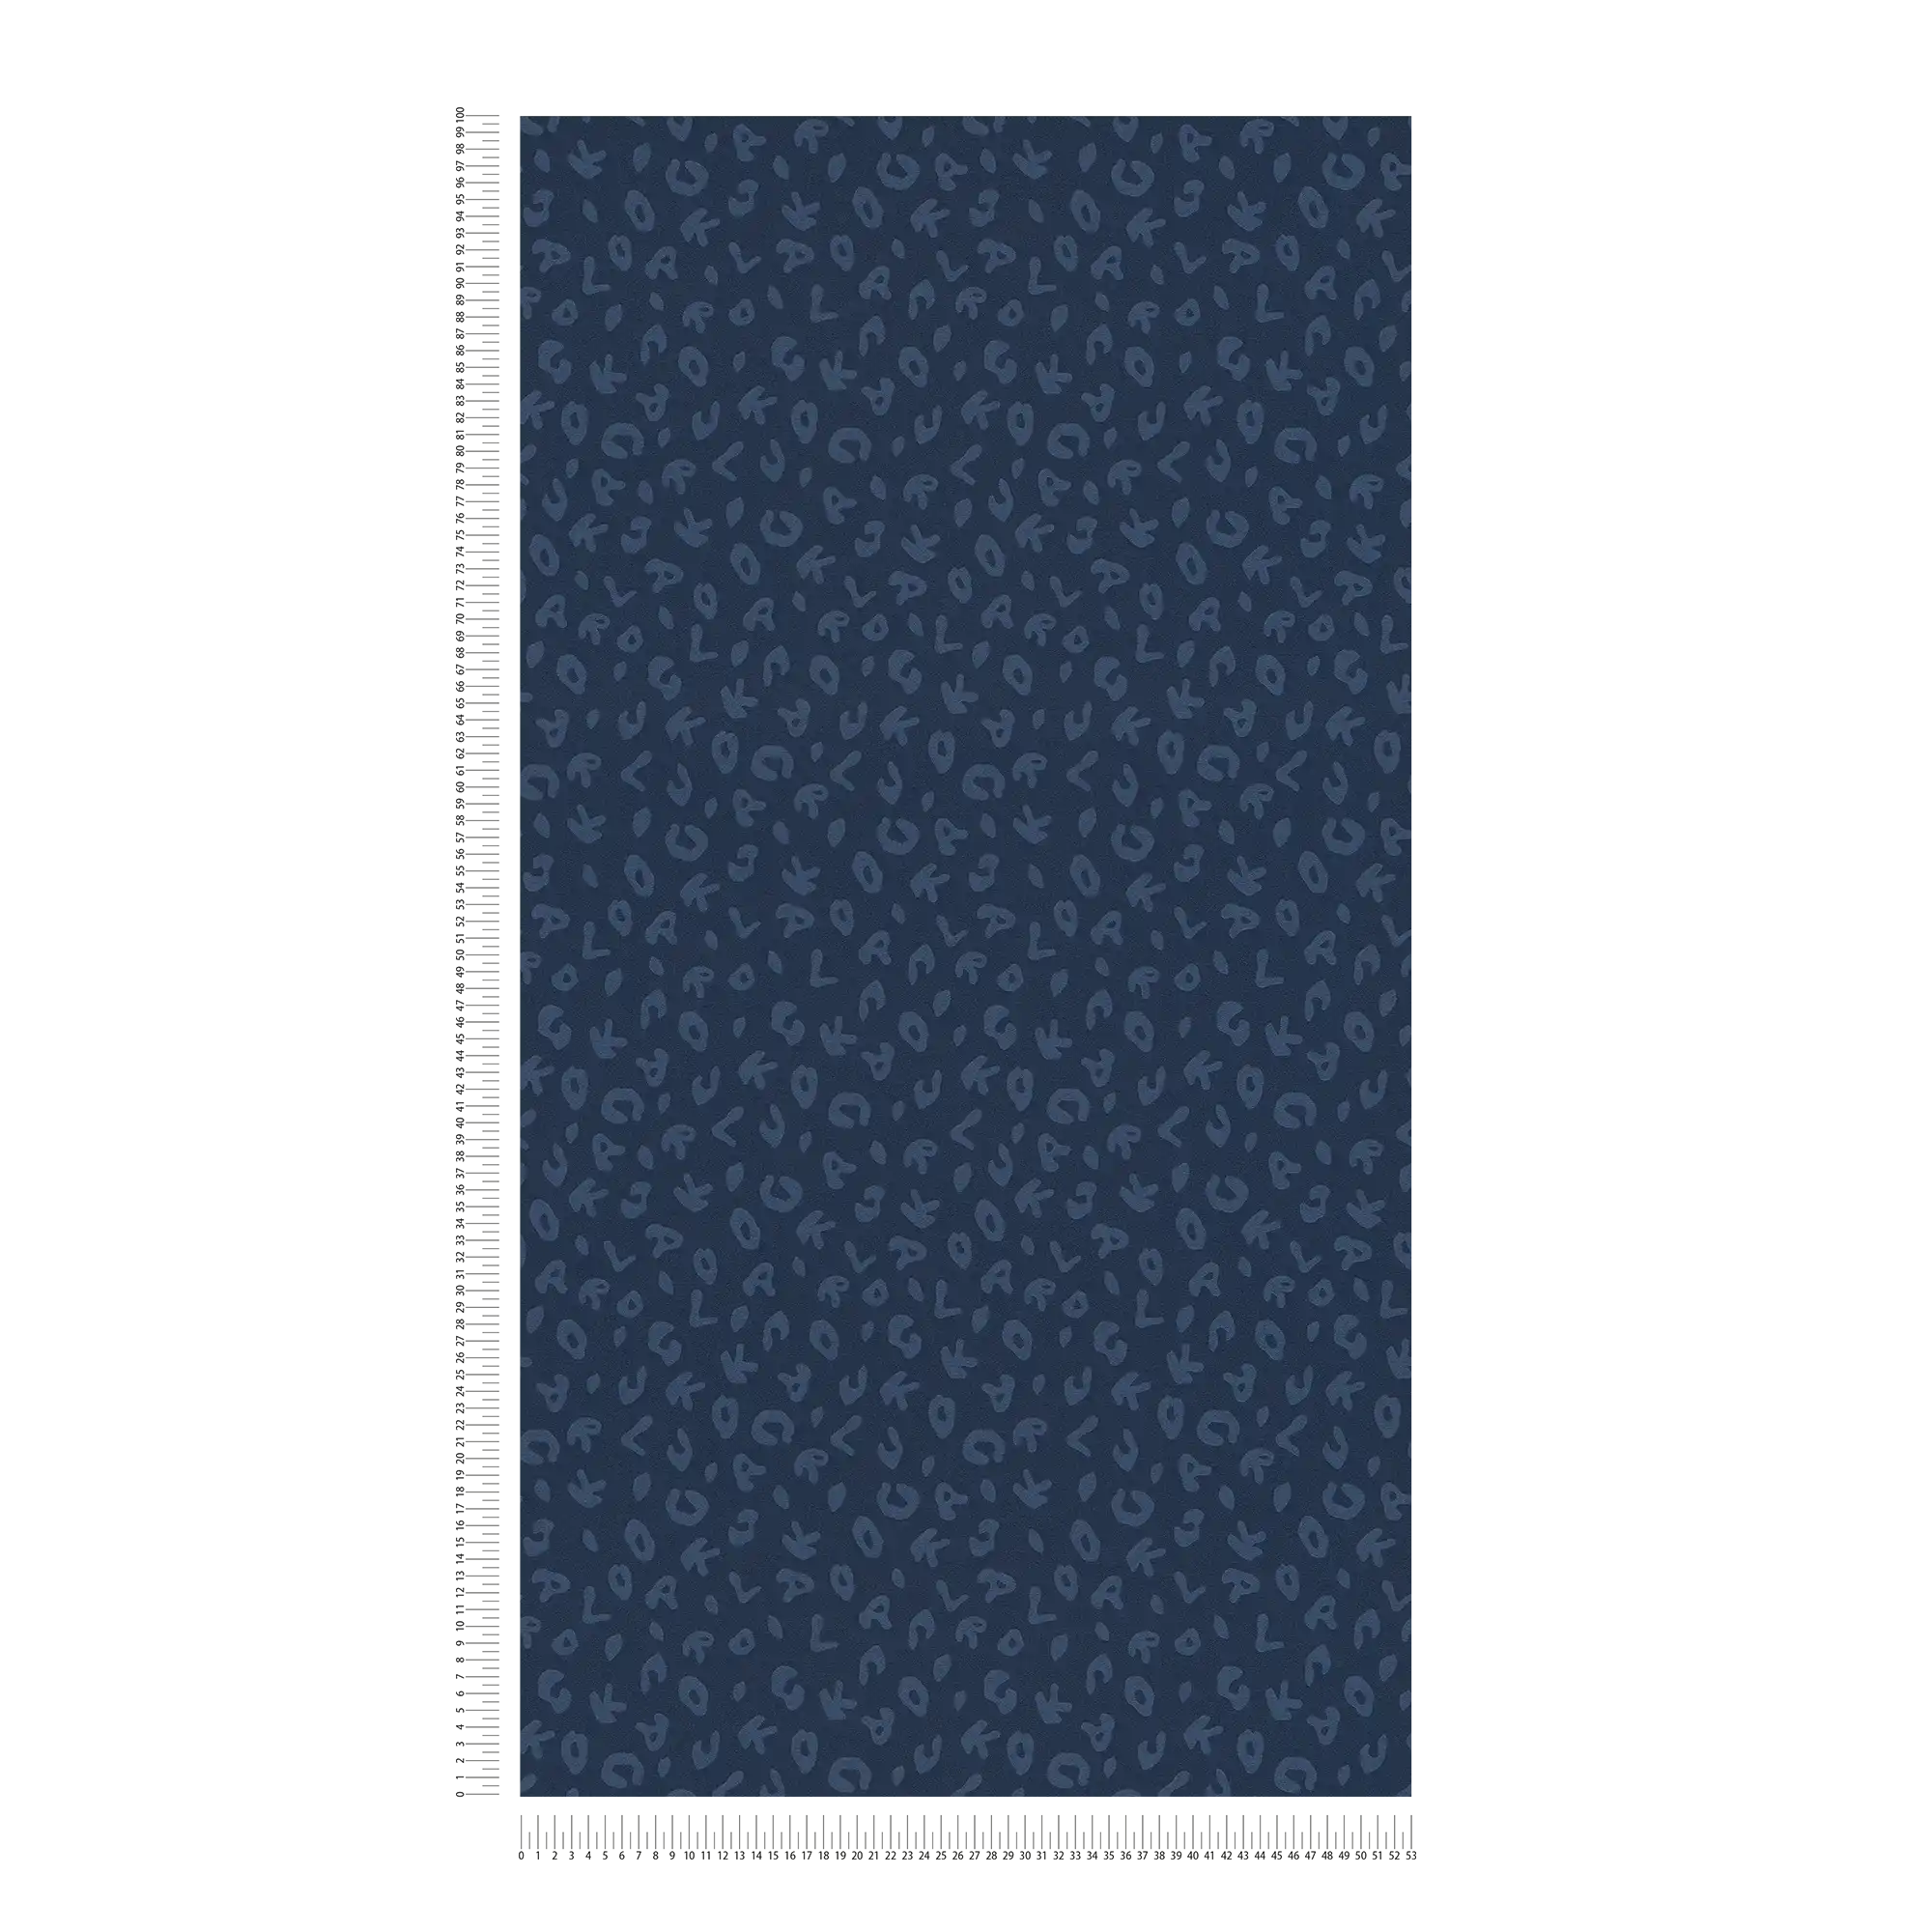             Karl LAGERFELD Tapete Animal Print – Blau, Metallic
        